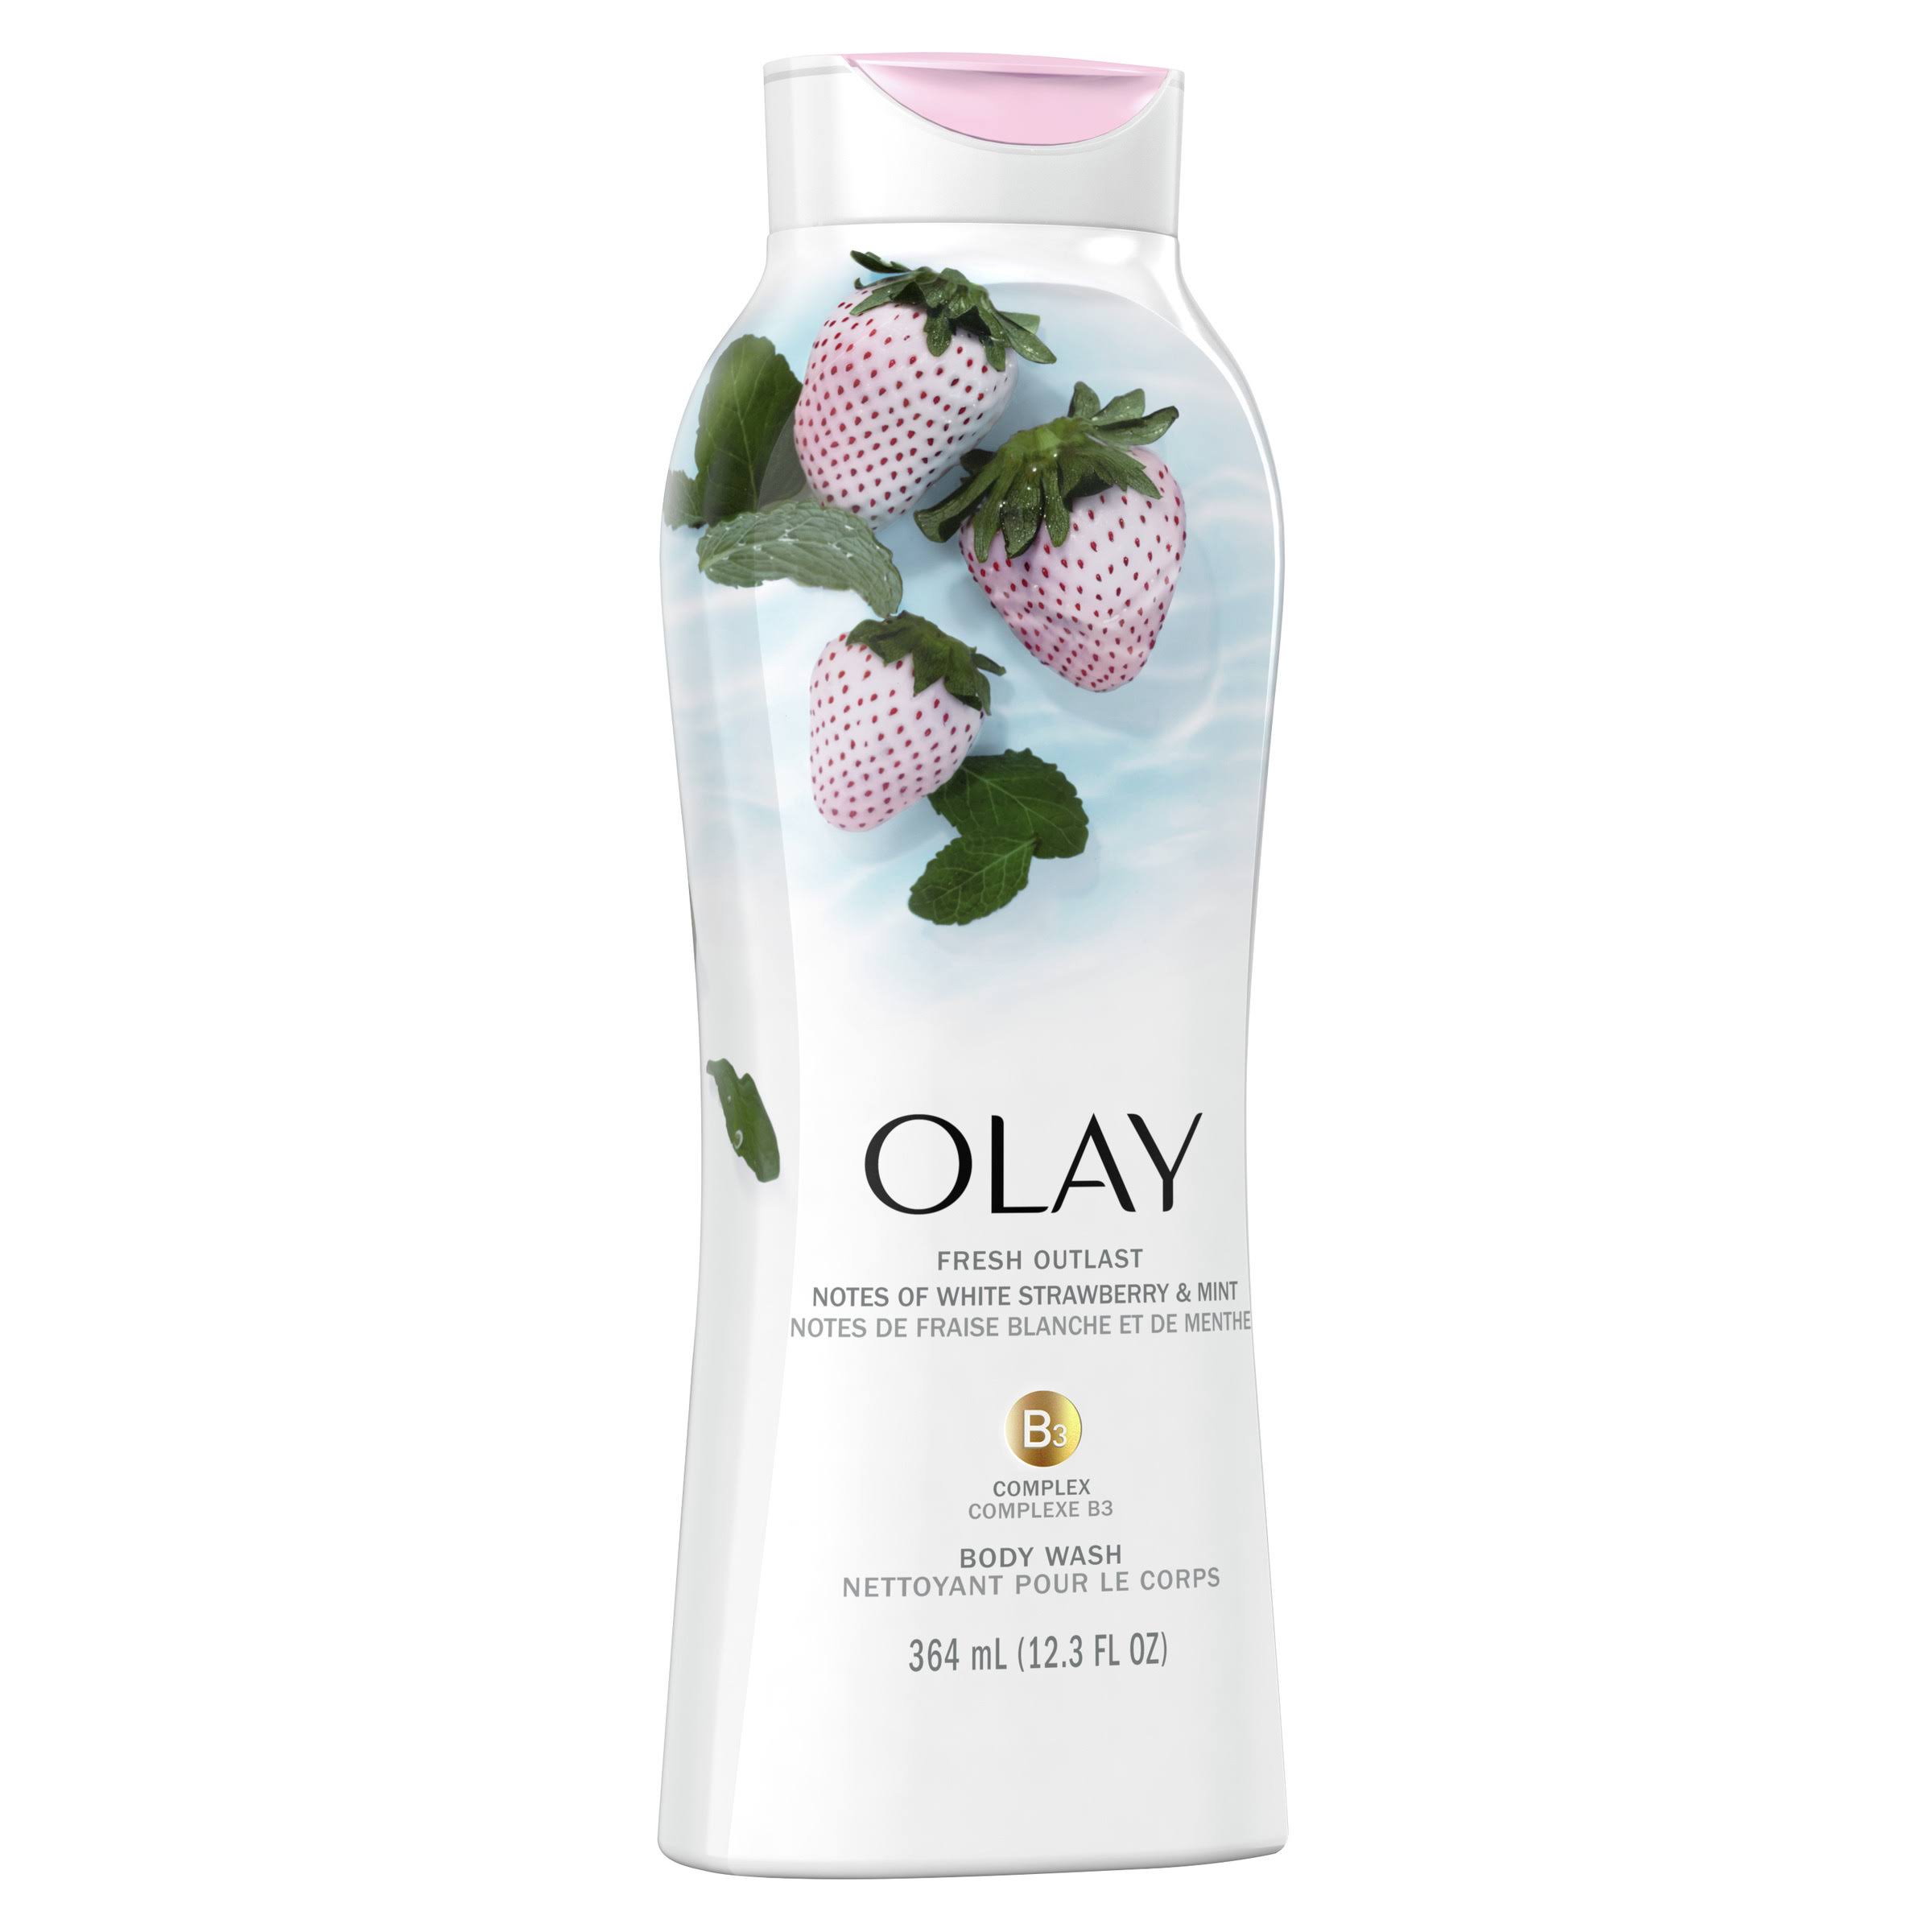 Olay Body Wash, White Strawberry & Mint - 12.3 fl oz